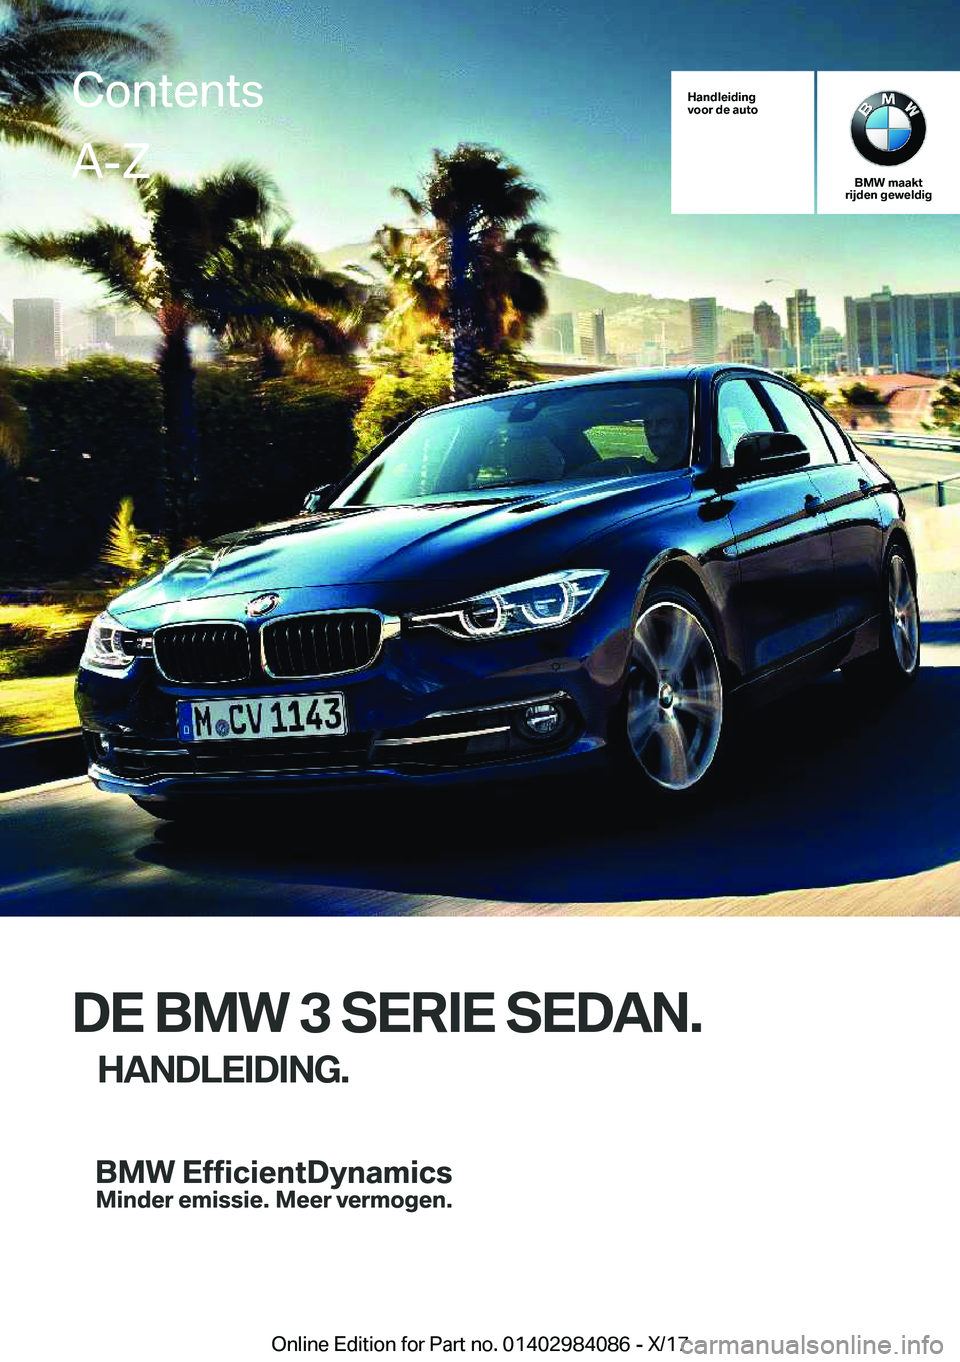 BMW 3 SERIES 2018  Instructieboekjes (in Dutch) �H�a�n�d�l�e�i�d�i�n�g
�v�o�o�r��d�e��a�u�t�o
�B�M�W��m�a�a�k�t
�r�i�j�d�e�n��g�e�w�e�l�d�i�g
�D�E��B�M�W��3��S�E�R�I�E��S�E�D�A�N�.
�H�A�N�D�L�E�I�D�I�N�G�.
�C�o�n�t�e�n�t�s�A�-�Z
�O�n�l�i�n�